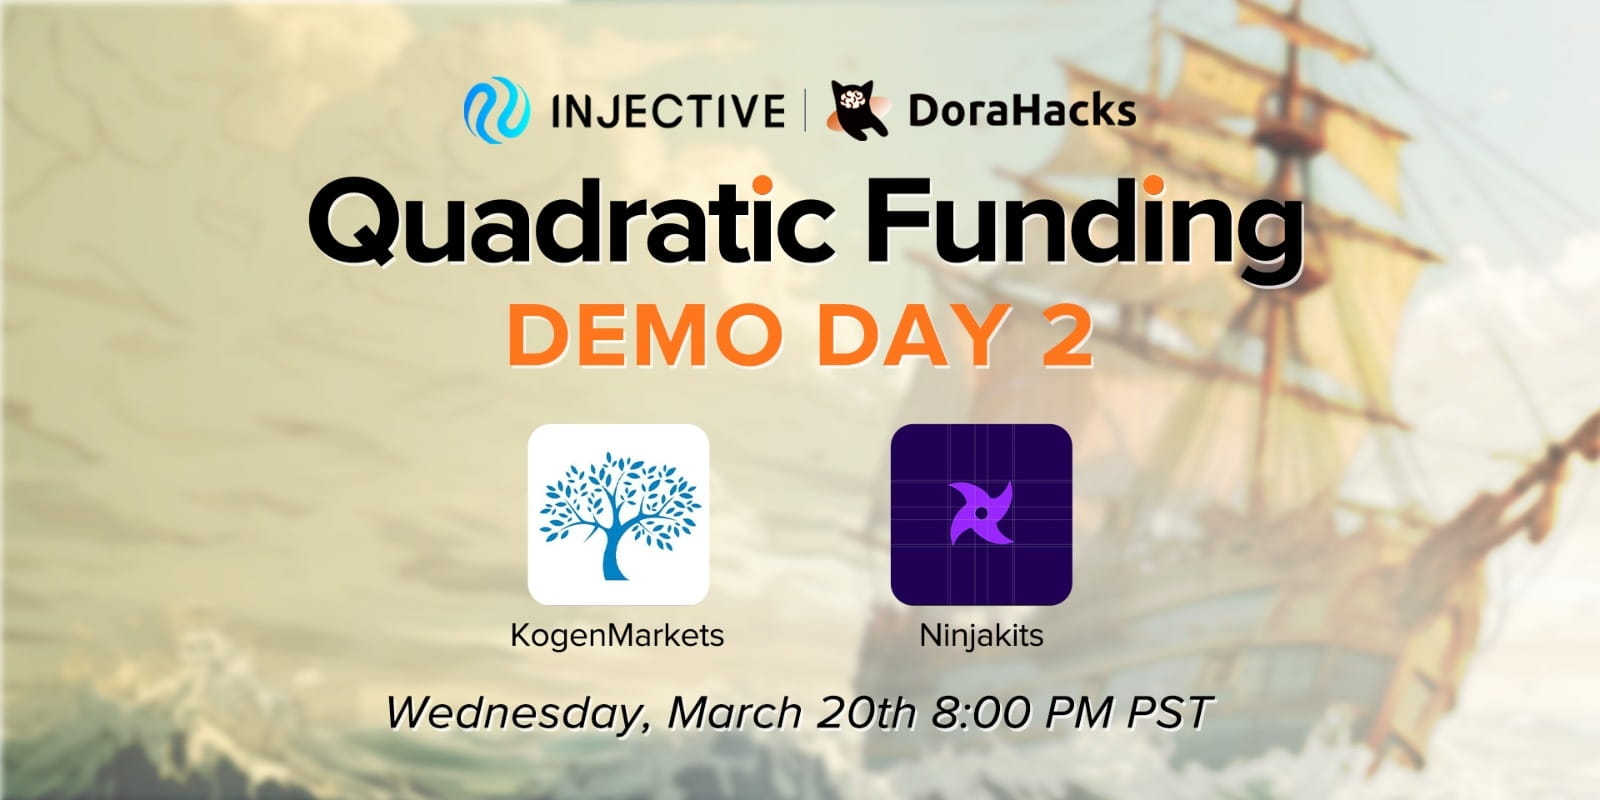 Injective Grant DAO Quadratic Funding Round1 Demo Day 2